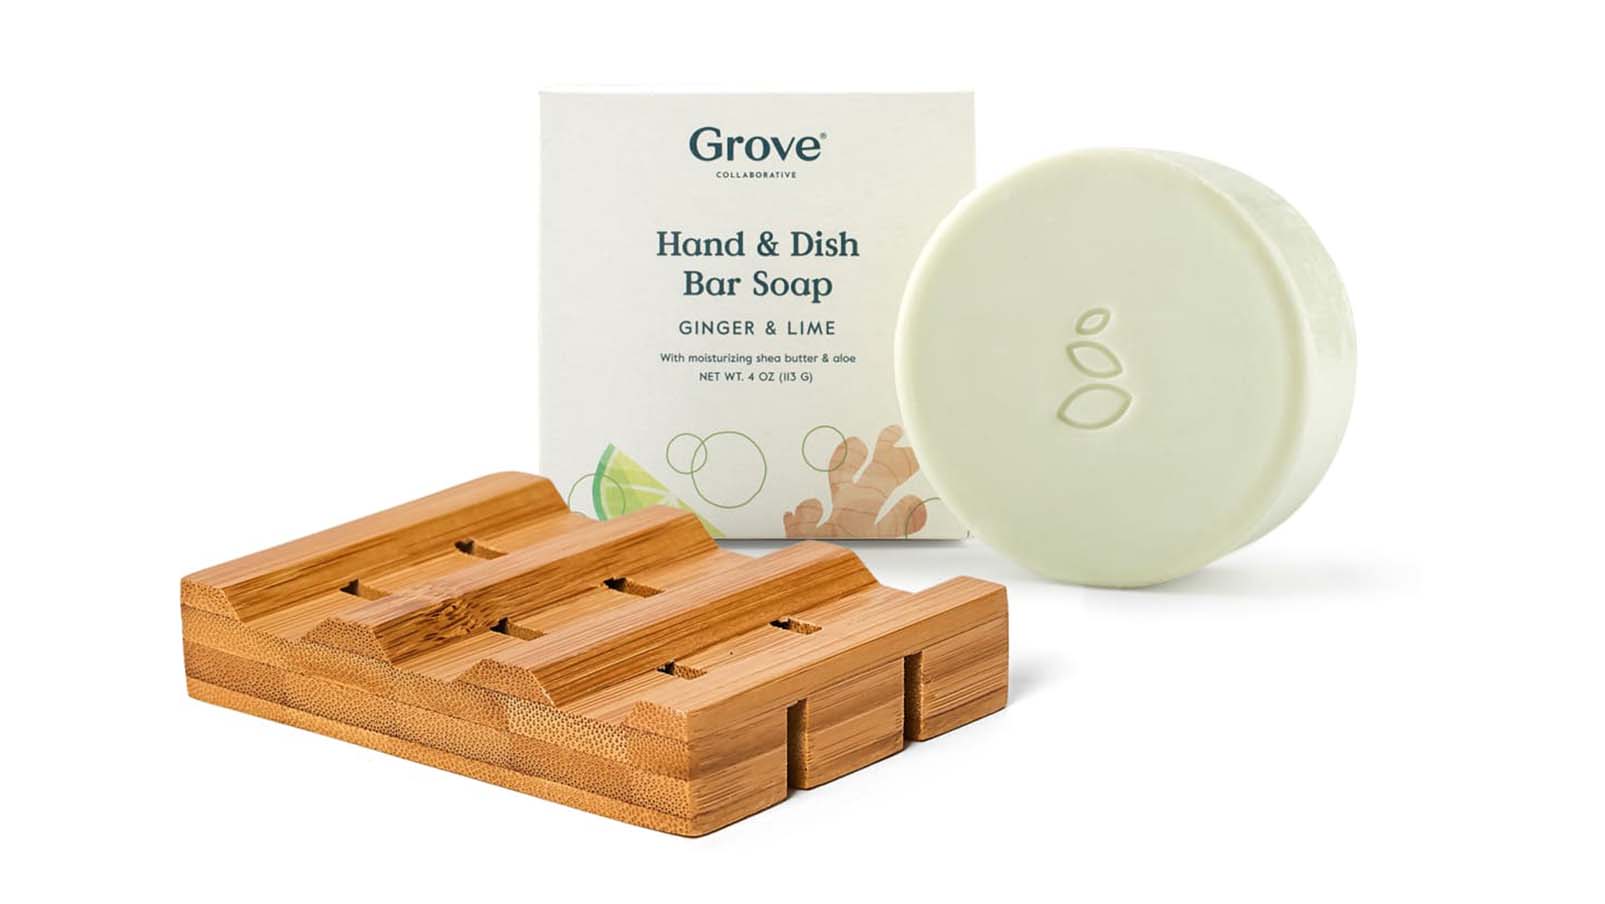 https://media.cnn.com/api/v1/images/stellar/prod/220816132759-sustainable-dish-washing-tips-essentials-grove-co-soap.jpg?c=original